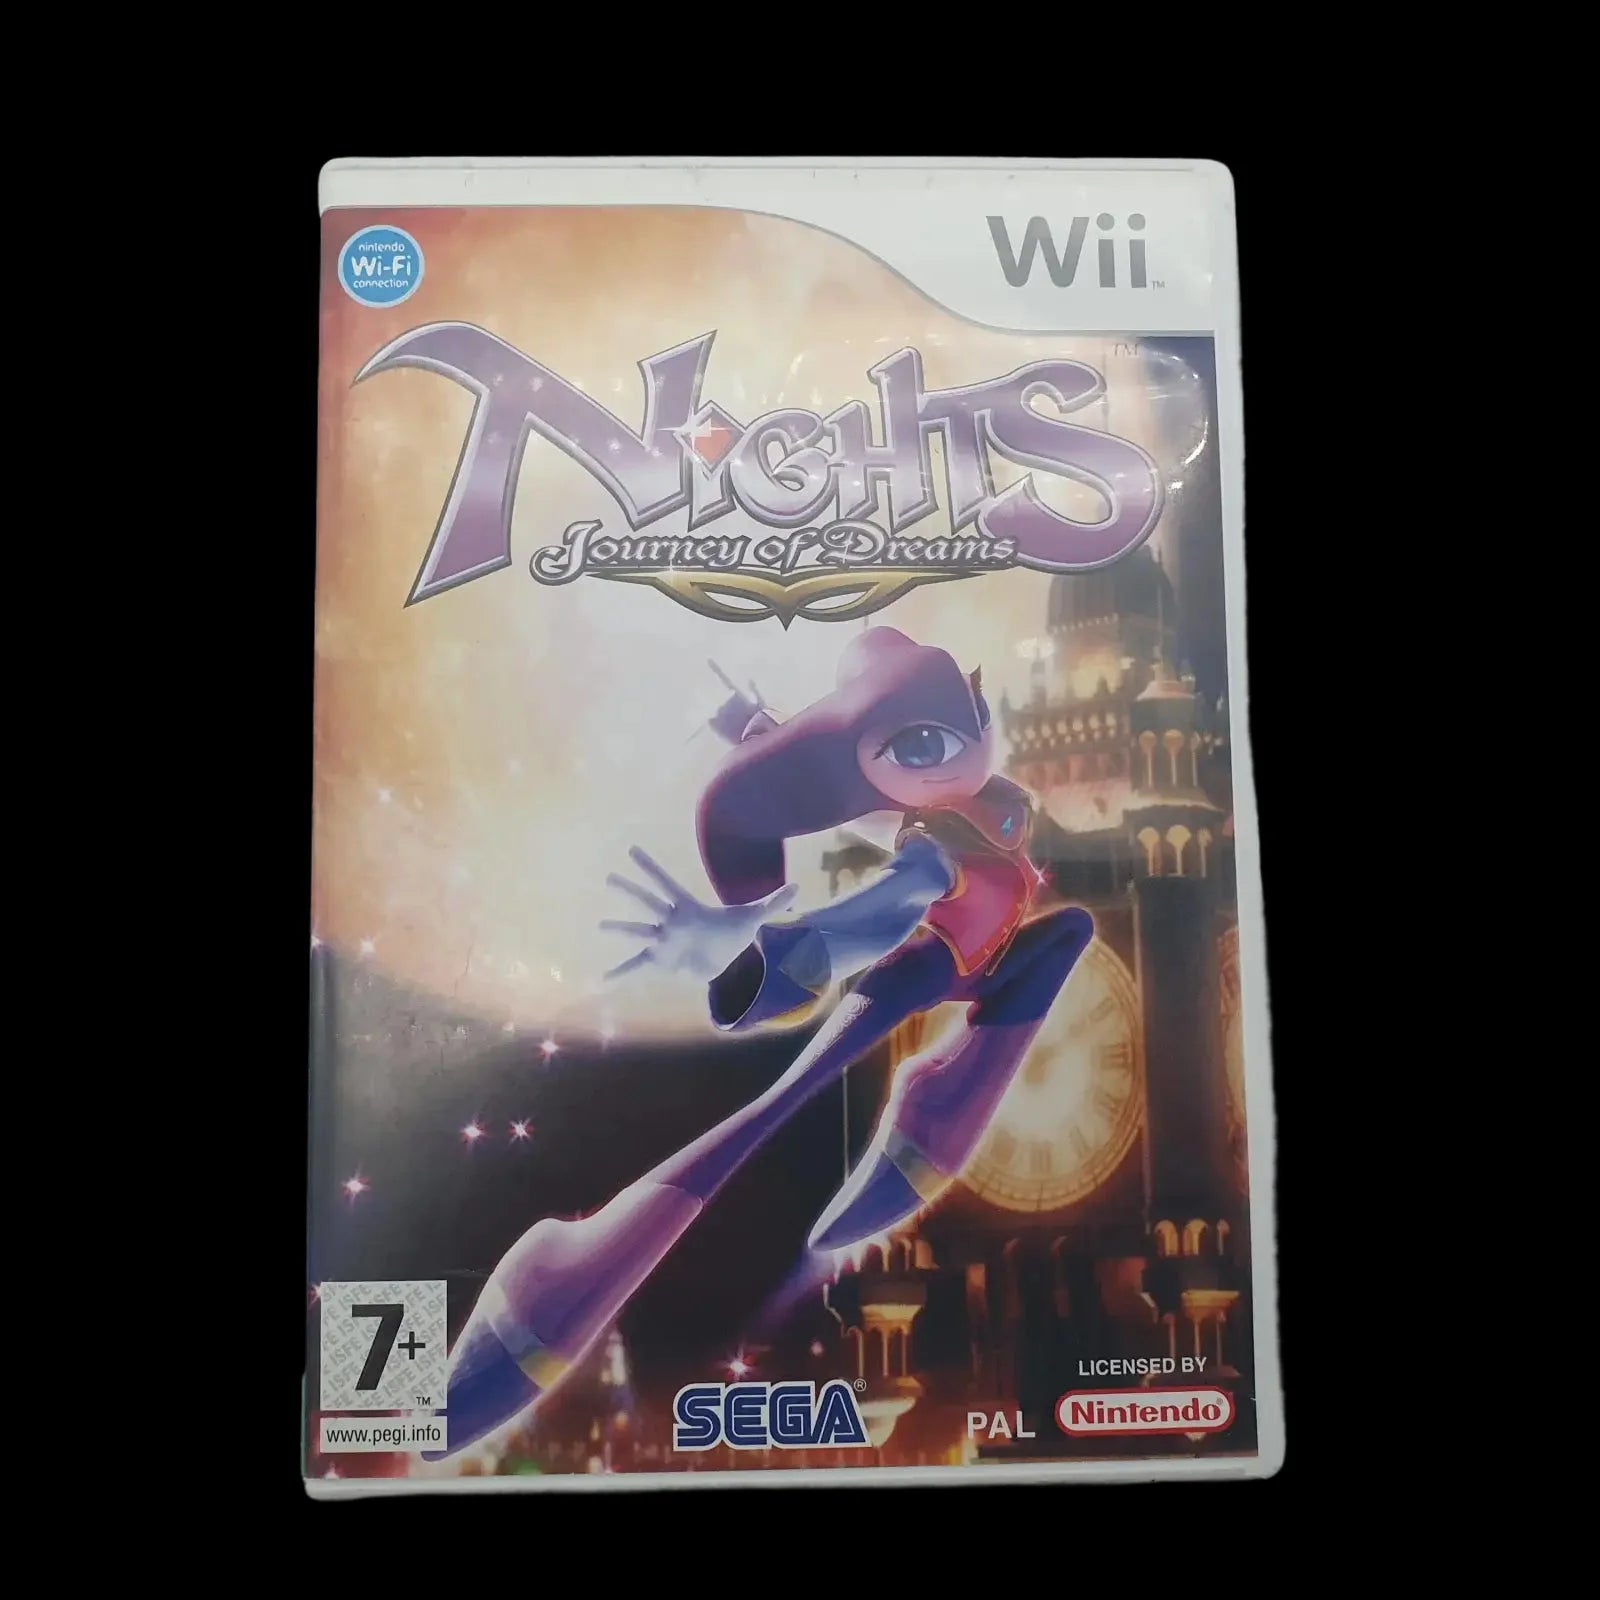 Nights Journey Of Dreams Nintendo Wii Sega 2007 Video Game